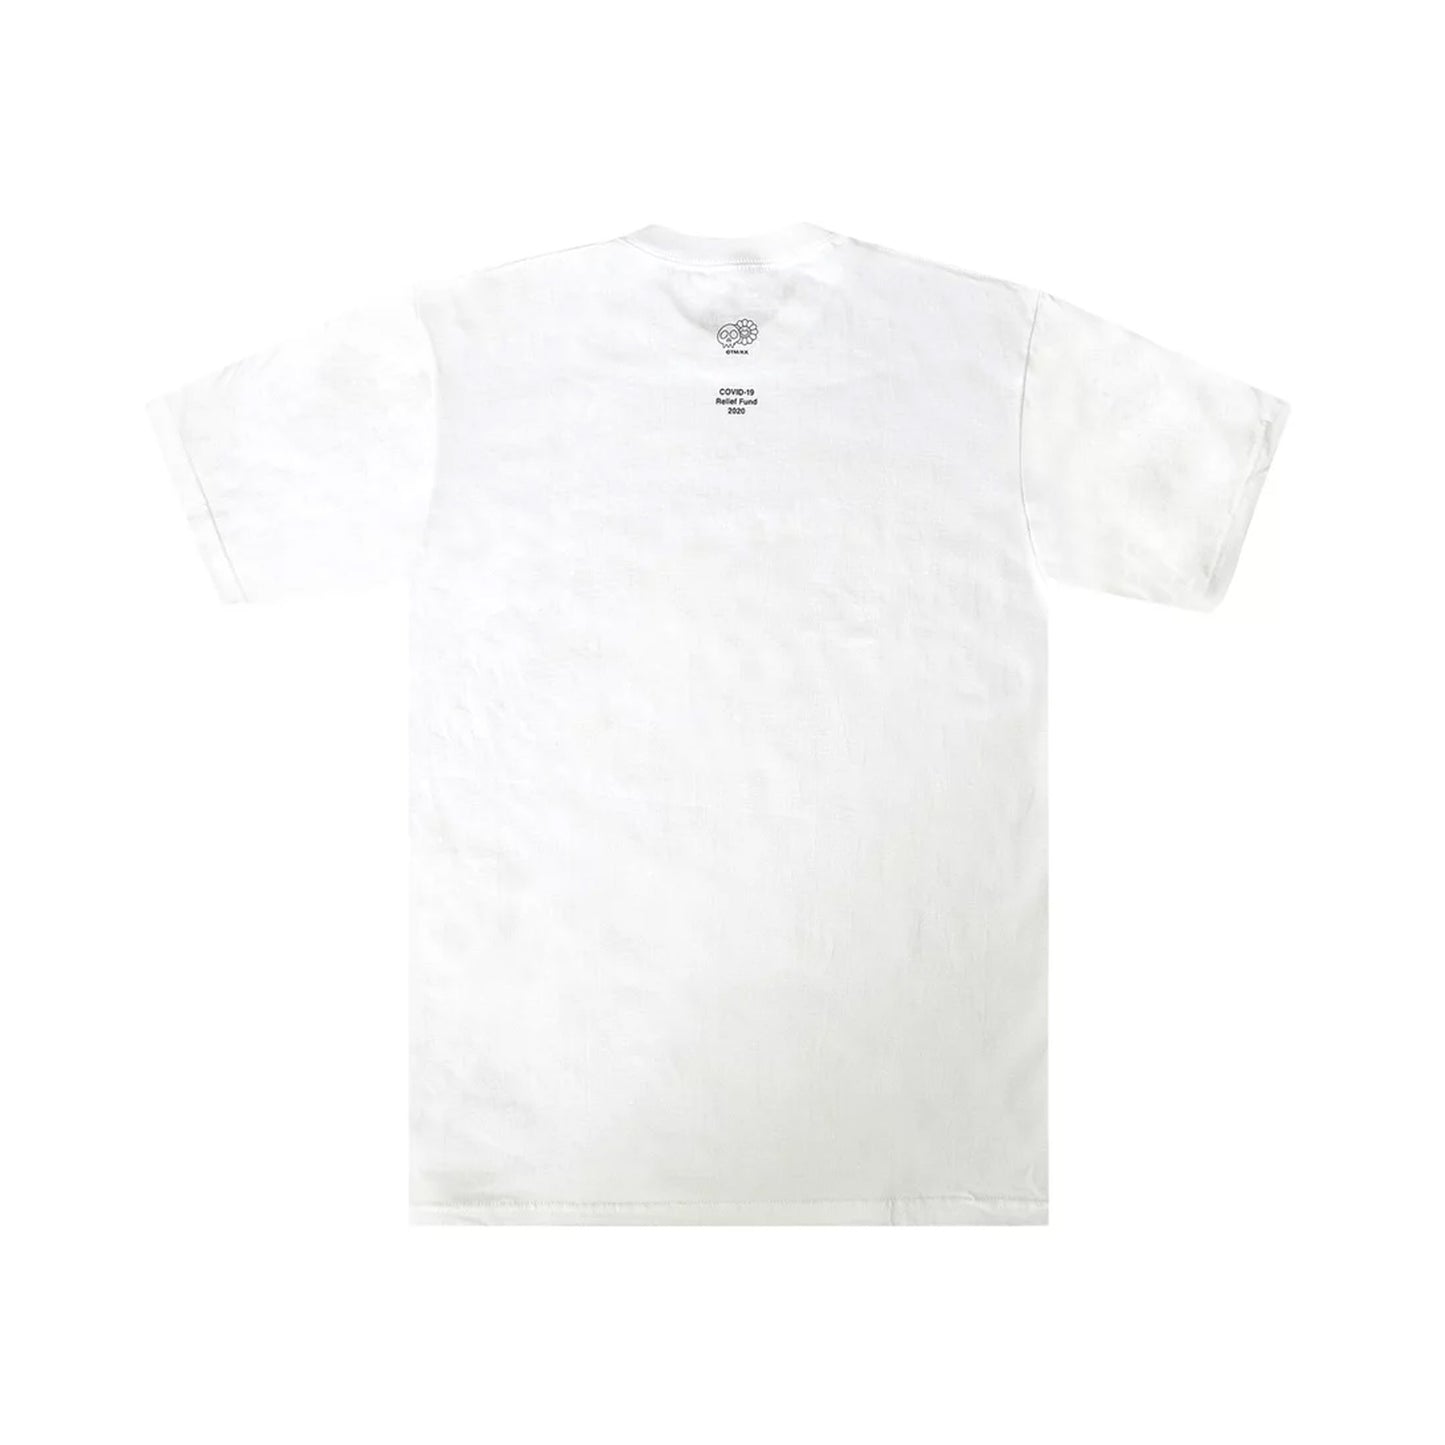 Supreme x Takashi Murakami COVID-19 Relief Box Logo Tee White (SS20)